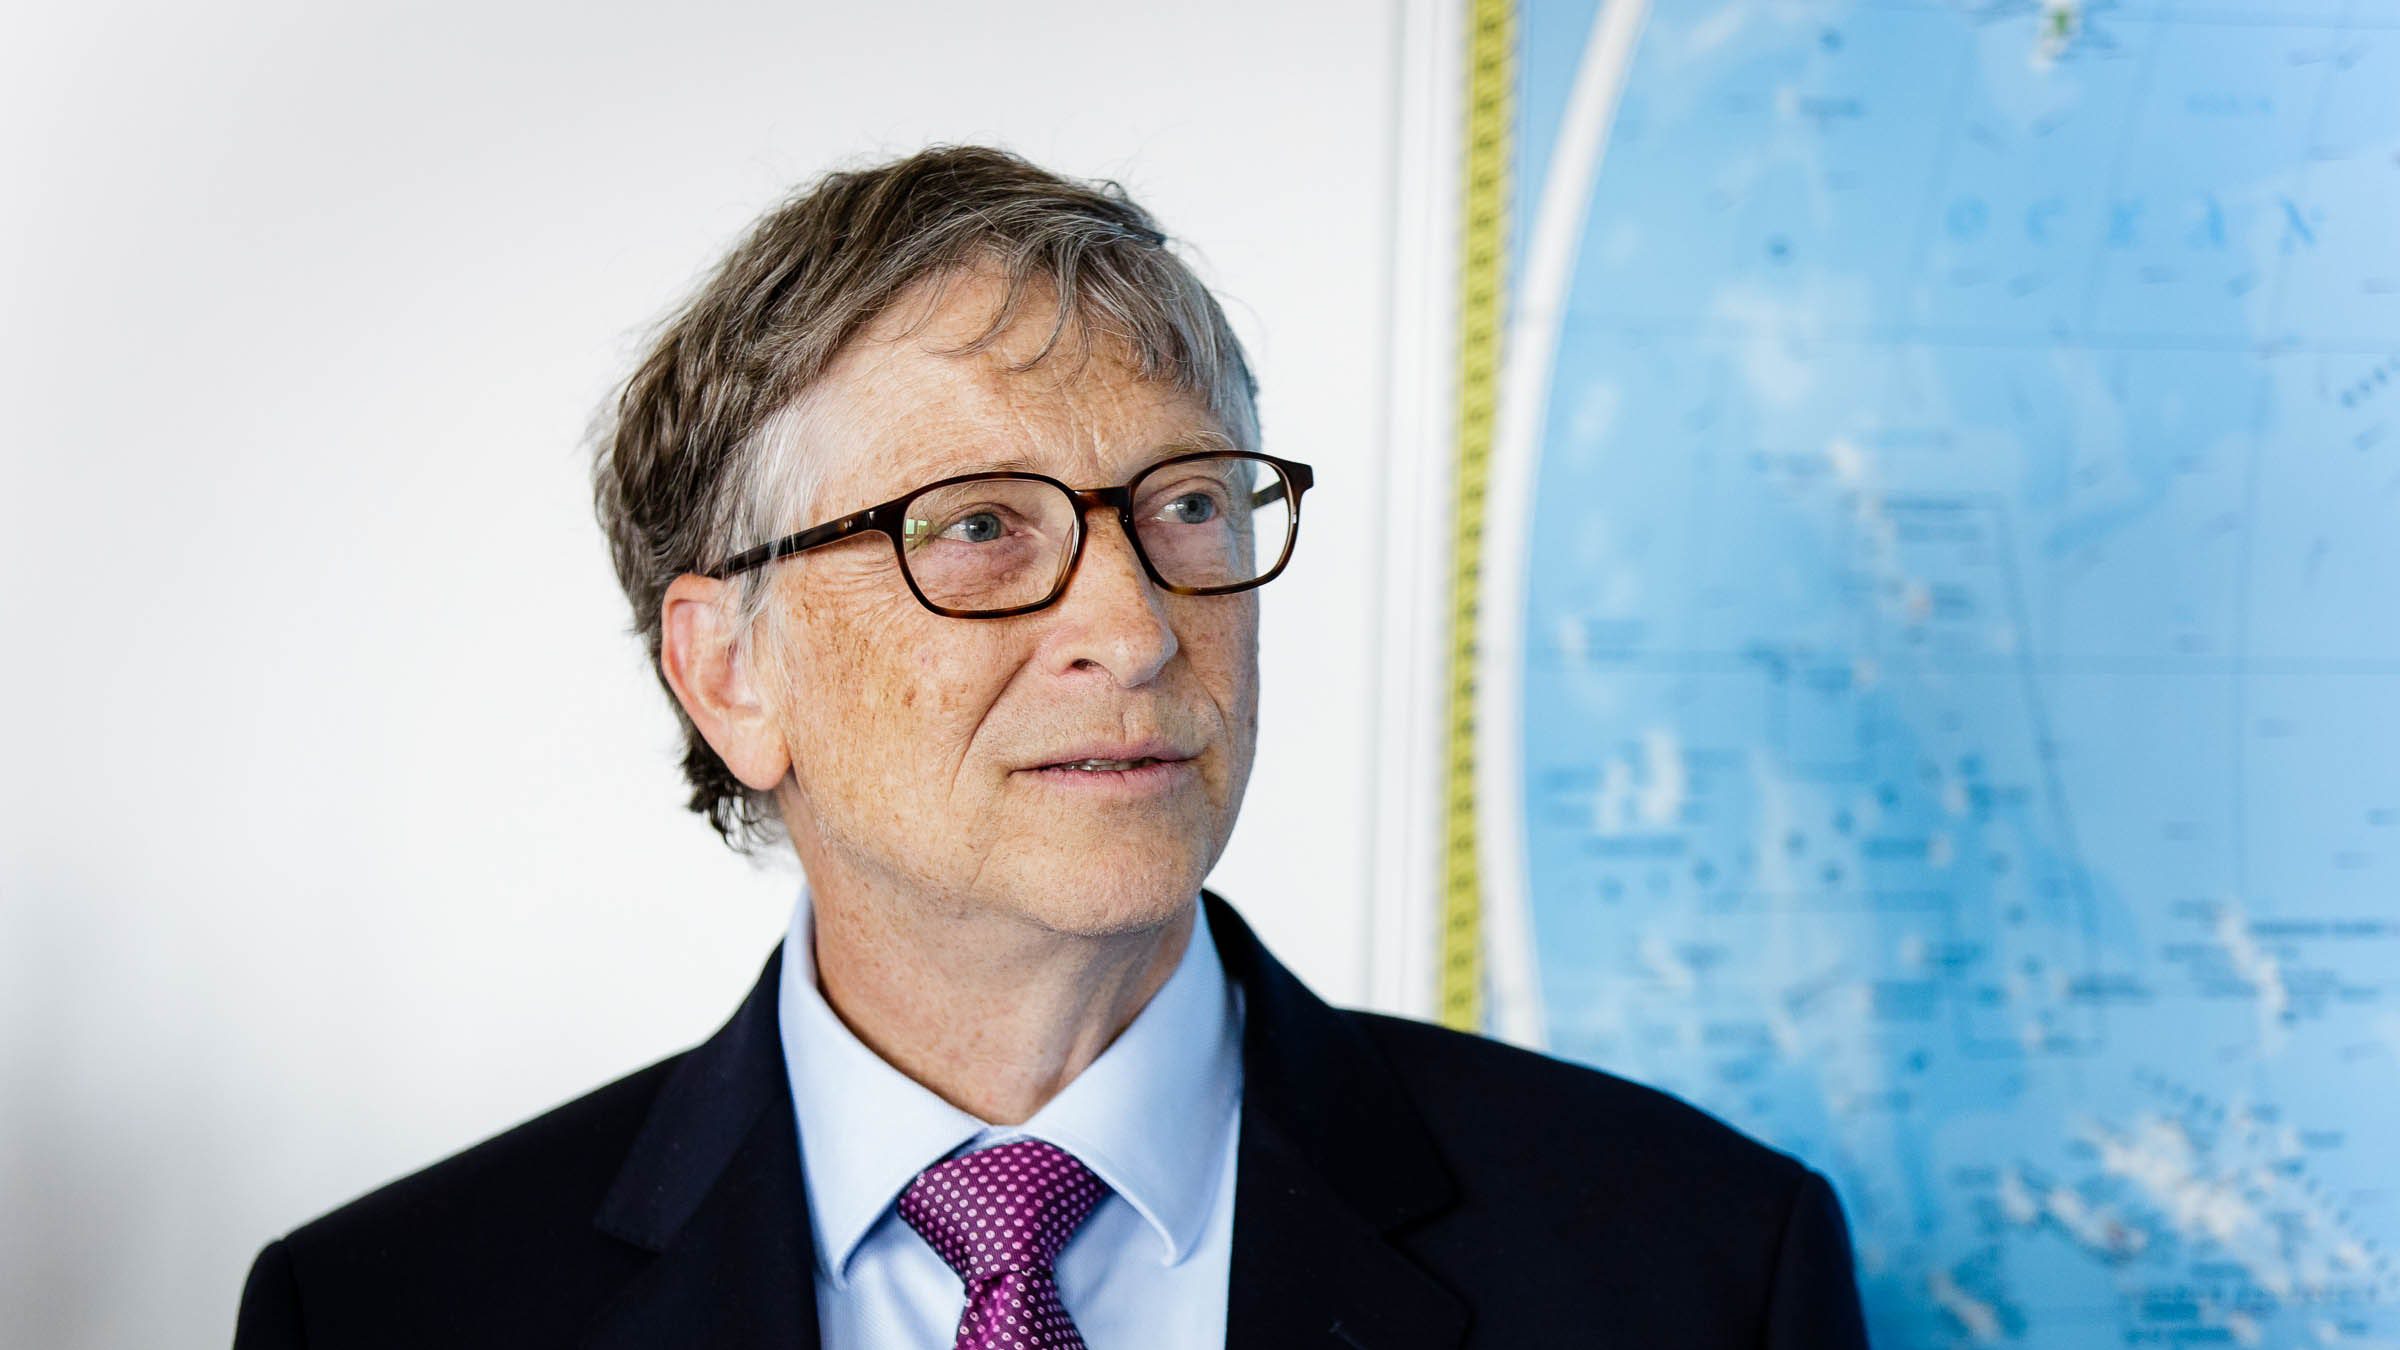 the Tech giant Bill Gates